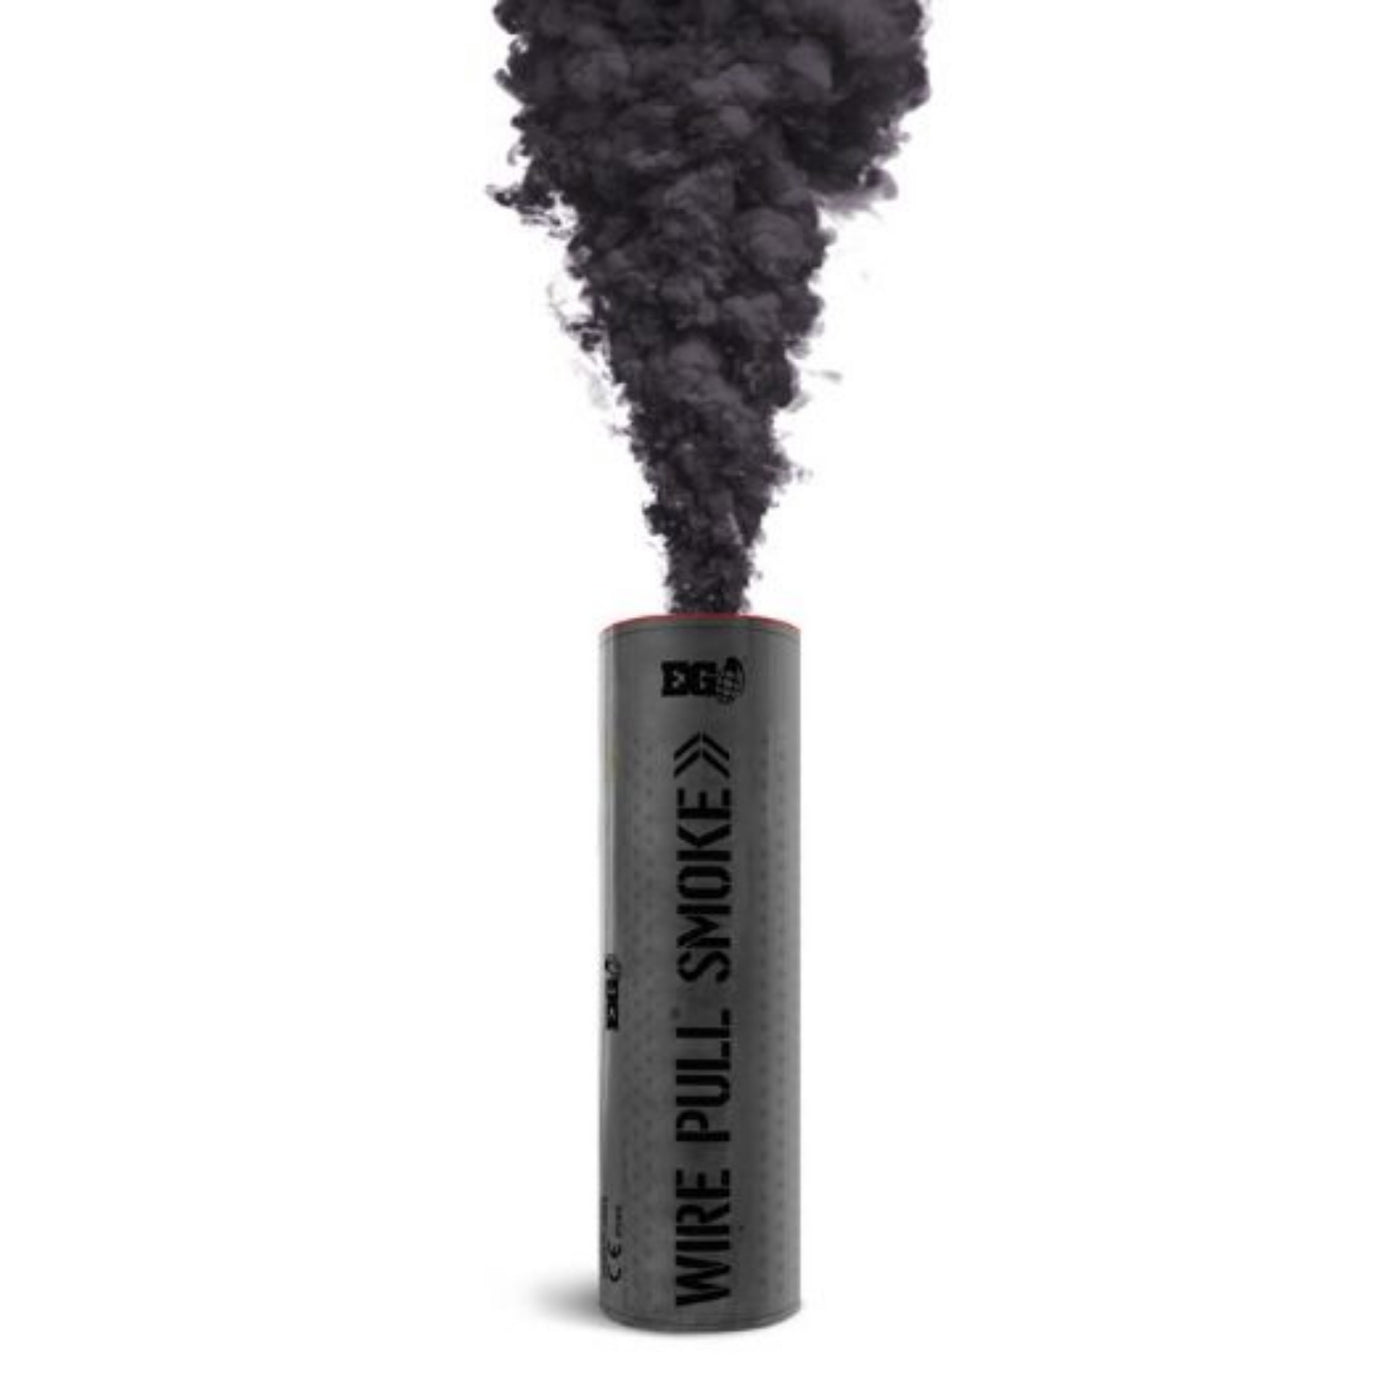 Smoke Grenade Bomb - Black (in-store pickup only)